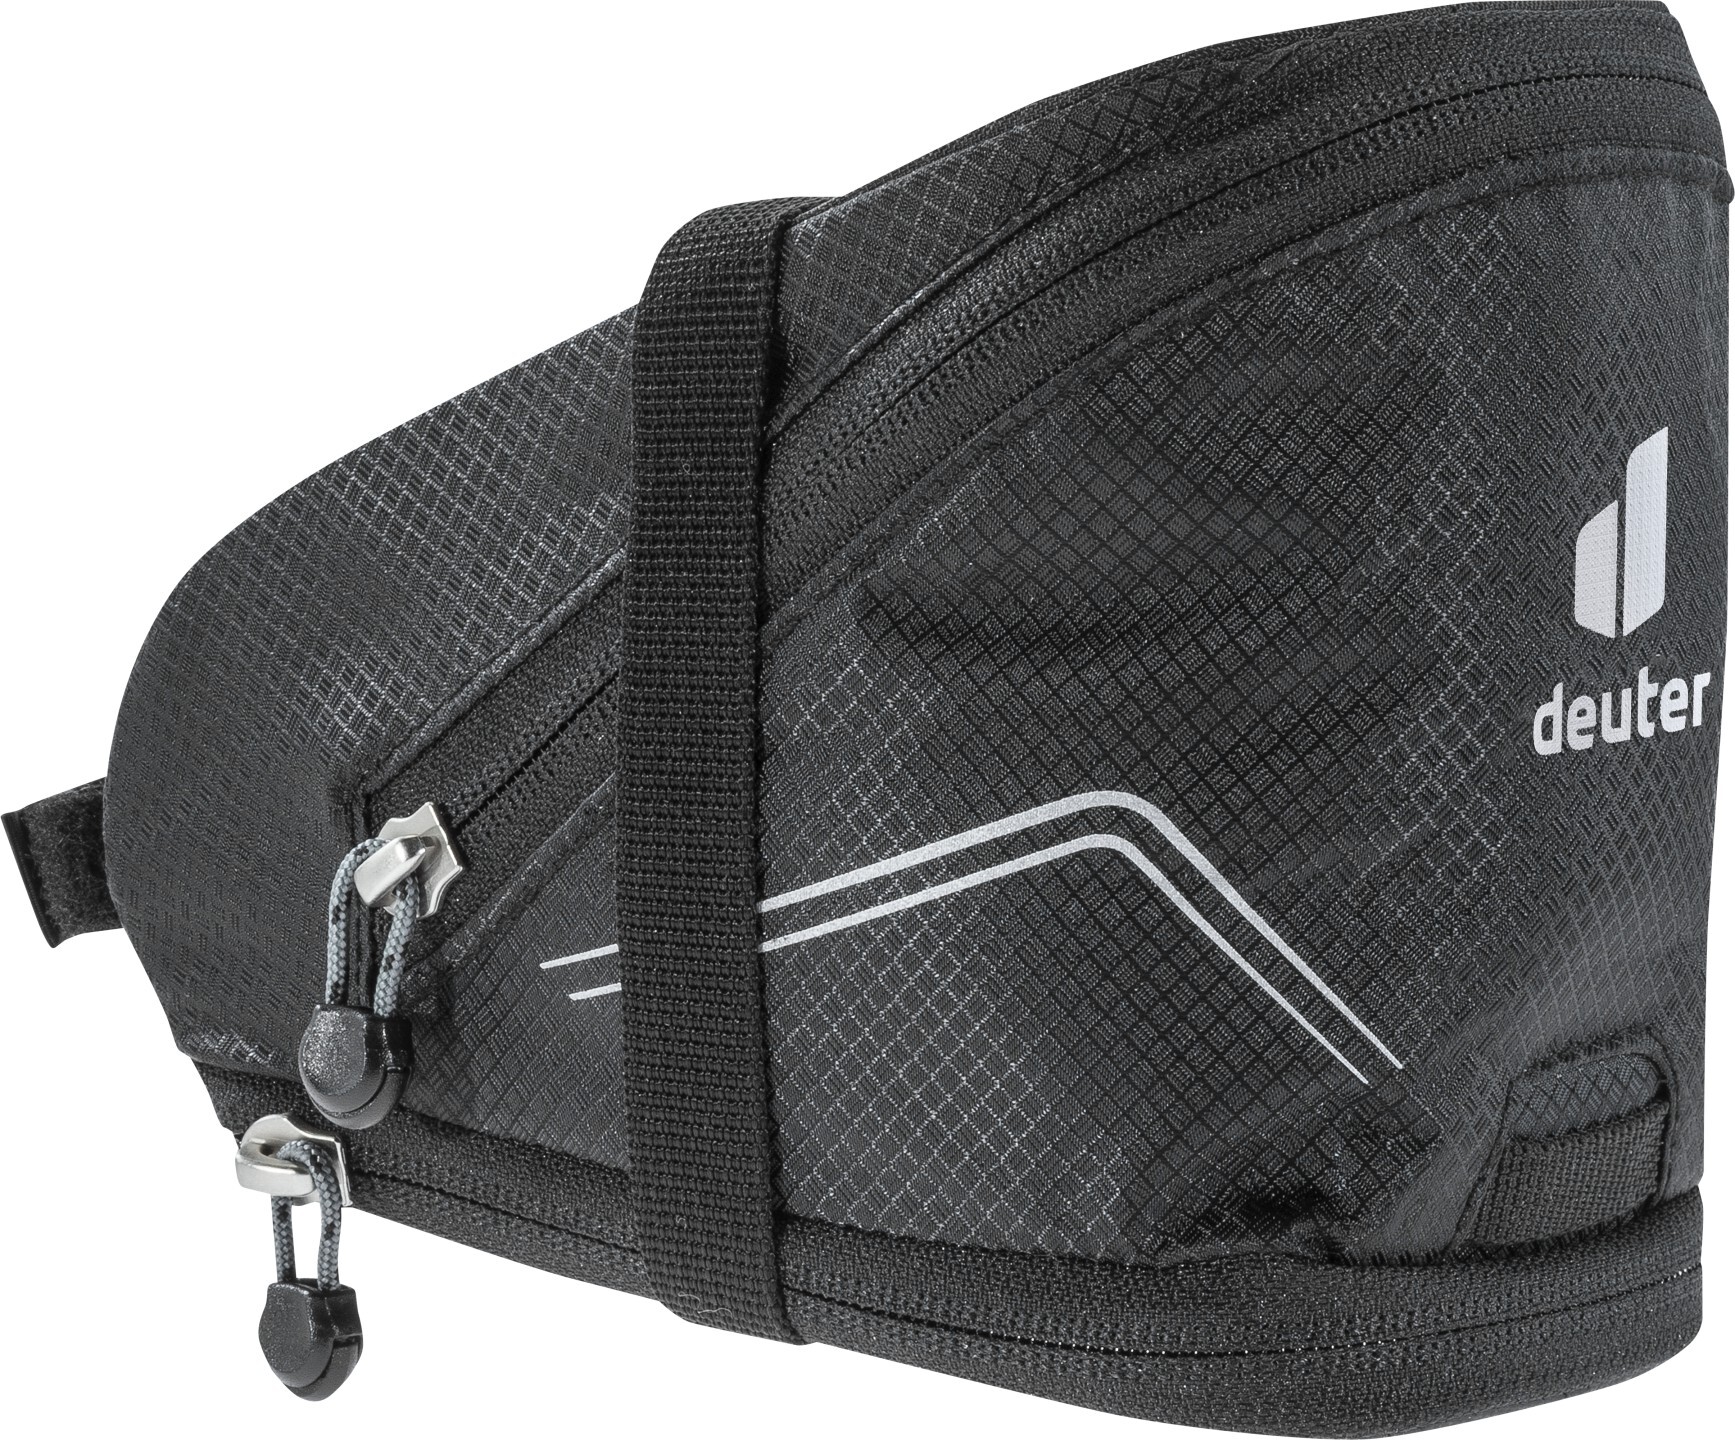 DEUTER Bike Bag II / black / Uni /  / 2021